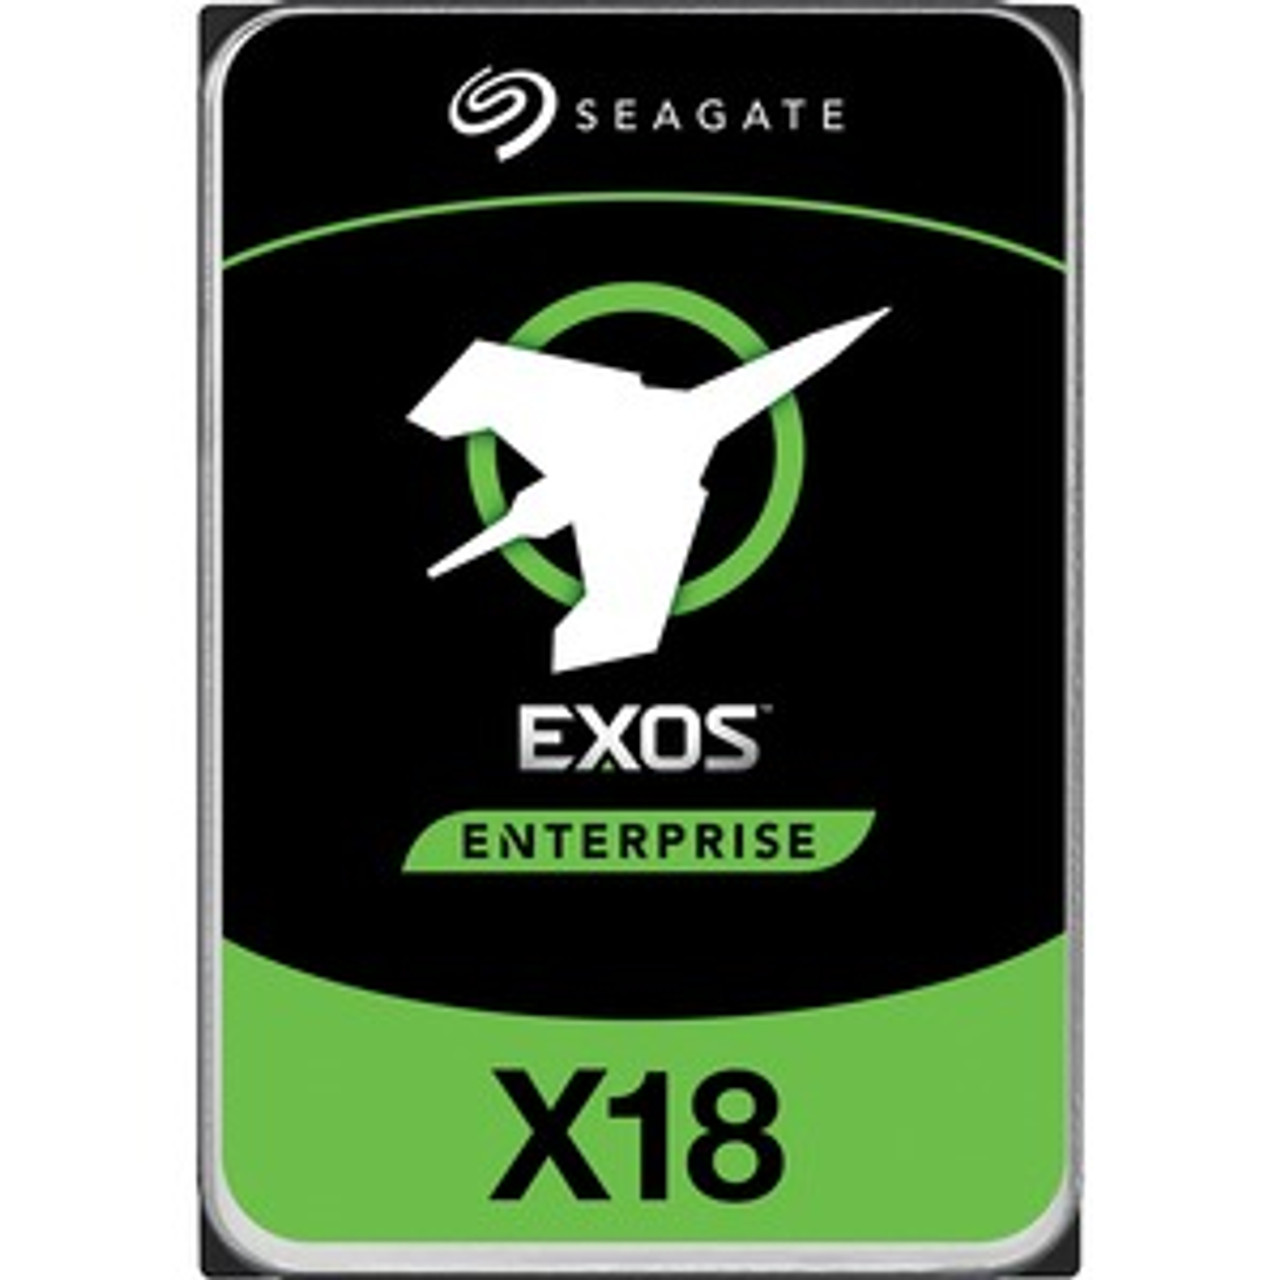 Seagate Exos X18 ST12000NM004J 12 TB Hard Drive - Internal - SAS (12Gb/s SAS) - Storage System, Video Surveillance System Device Supported - 7200rpm - 5 Year  MFR P/N ST12000NM004J